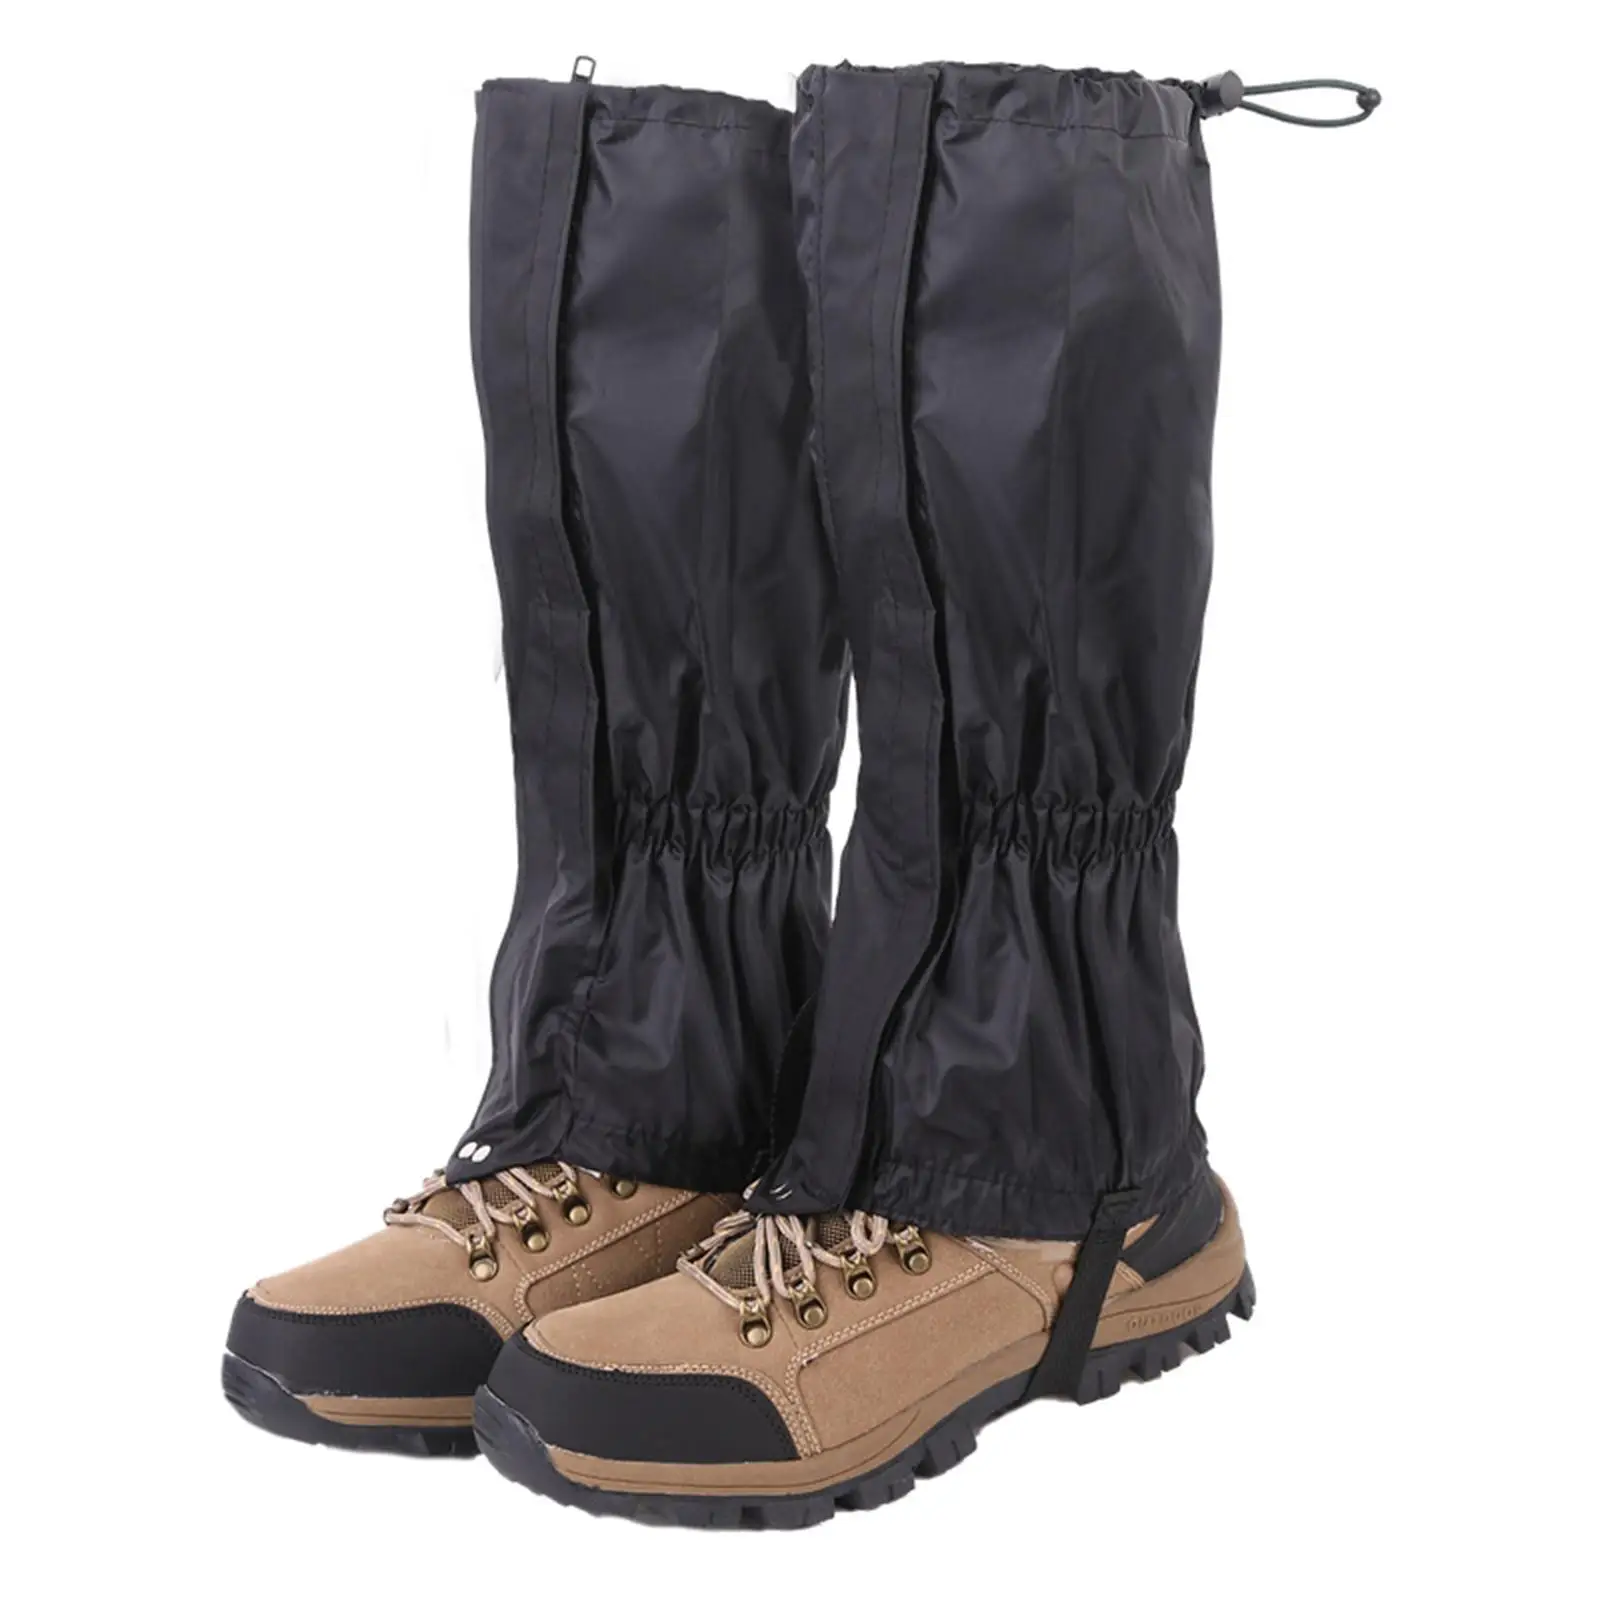 Rainproof Leg Gaiters Anti-Tear Adjustable Legging Guard Waterproof Portable Cover for Camping Walking Adults Running Equipment